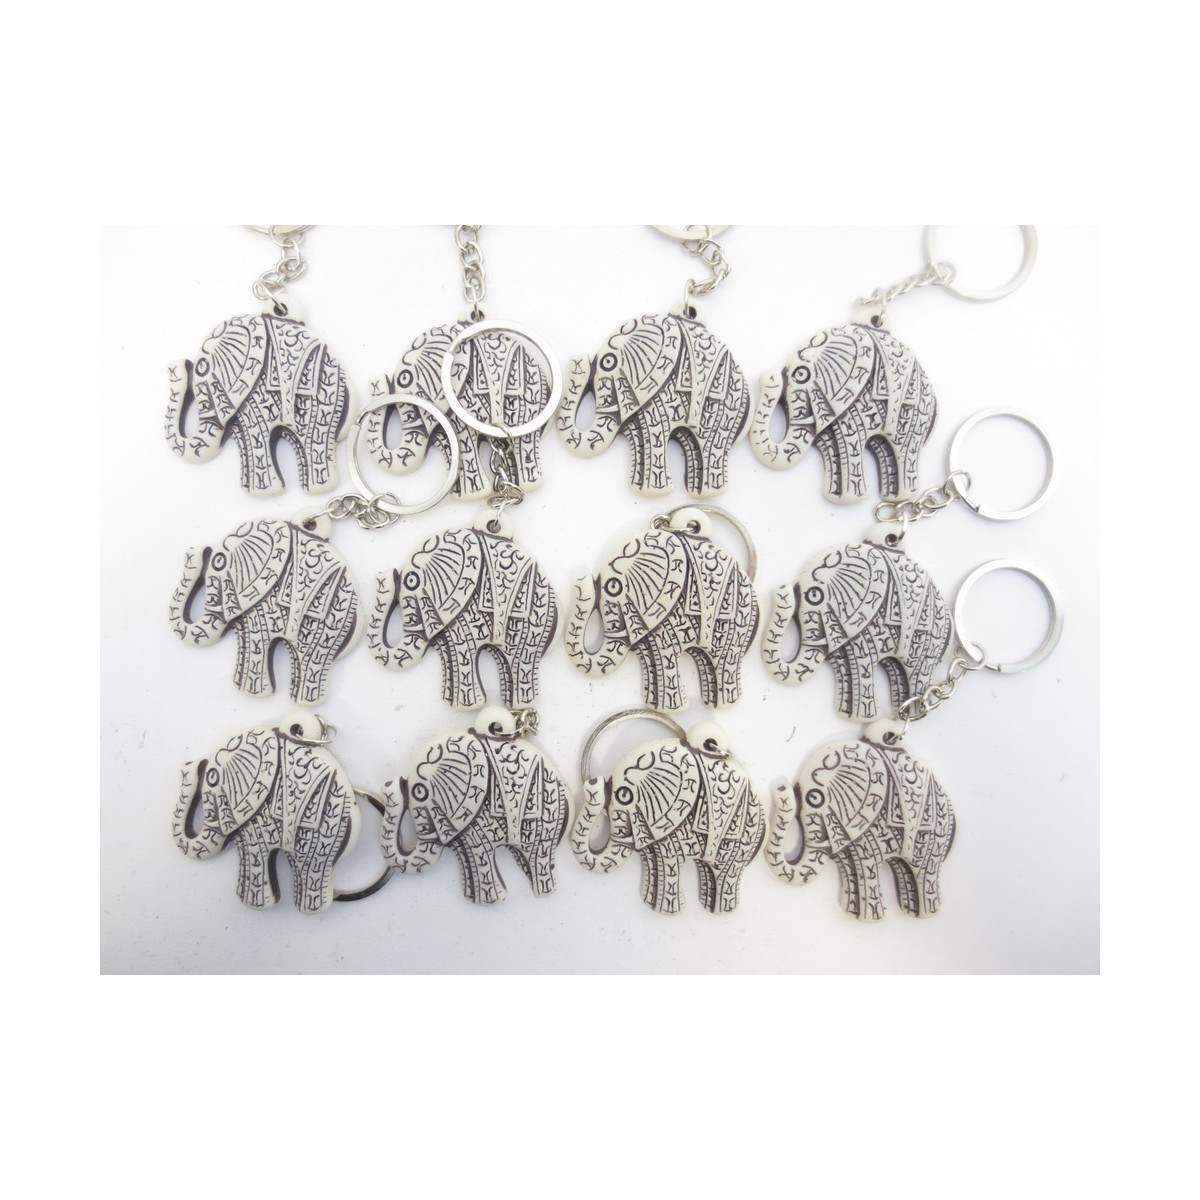 Polystone Elefant Schlüsselanhänger 1 Stück